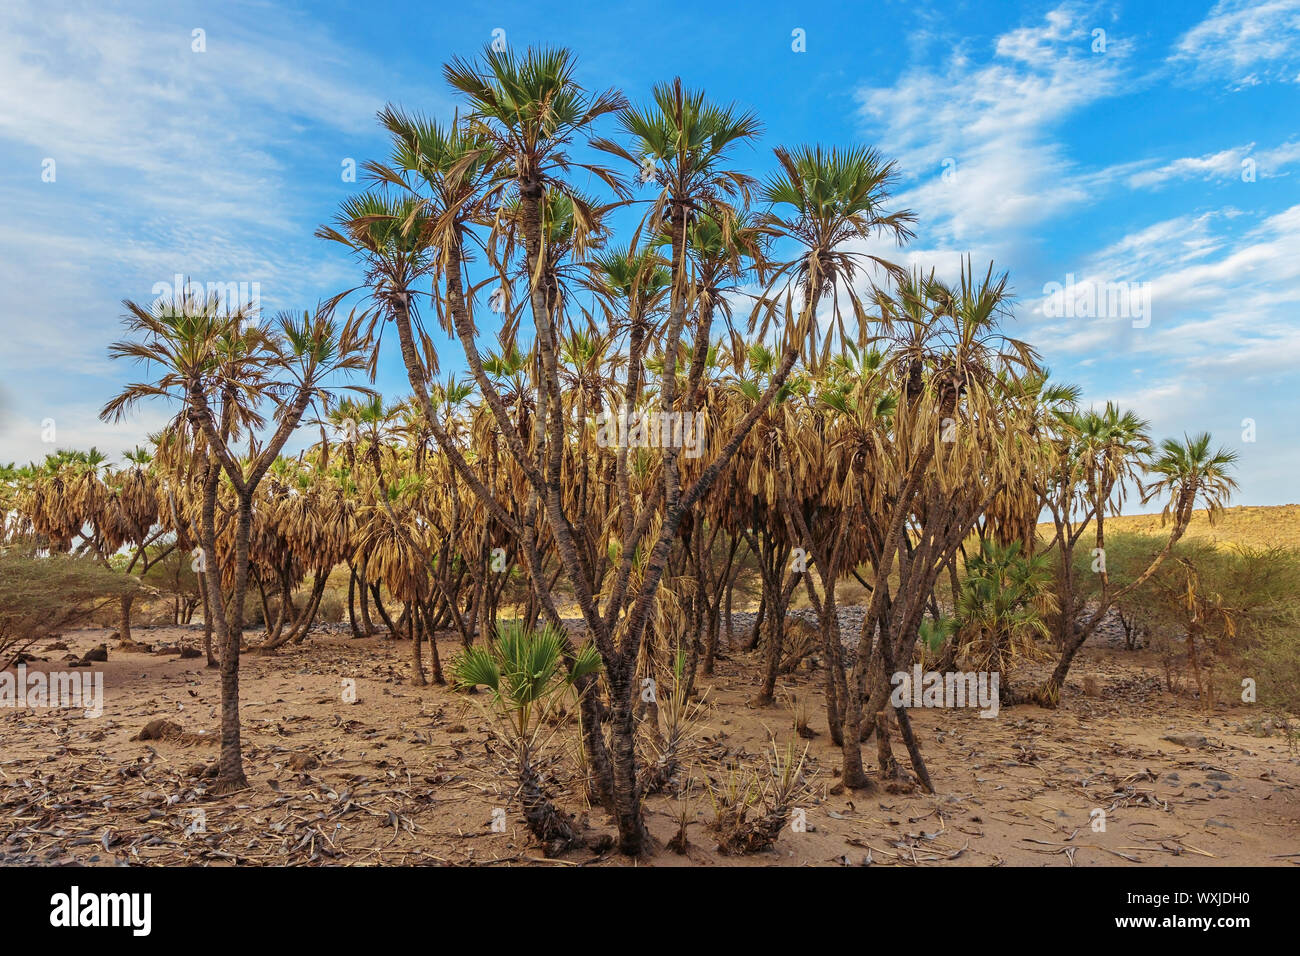 Palm trees in the desert, Saudi Arabia Stock Photo